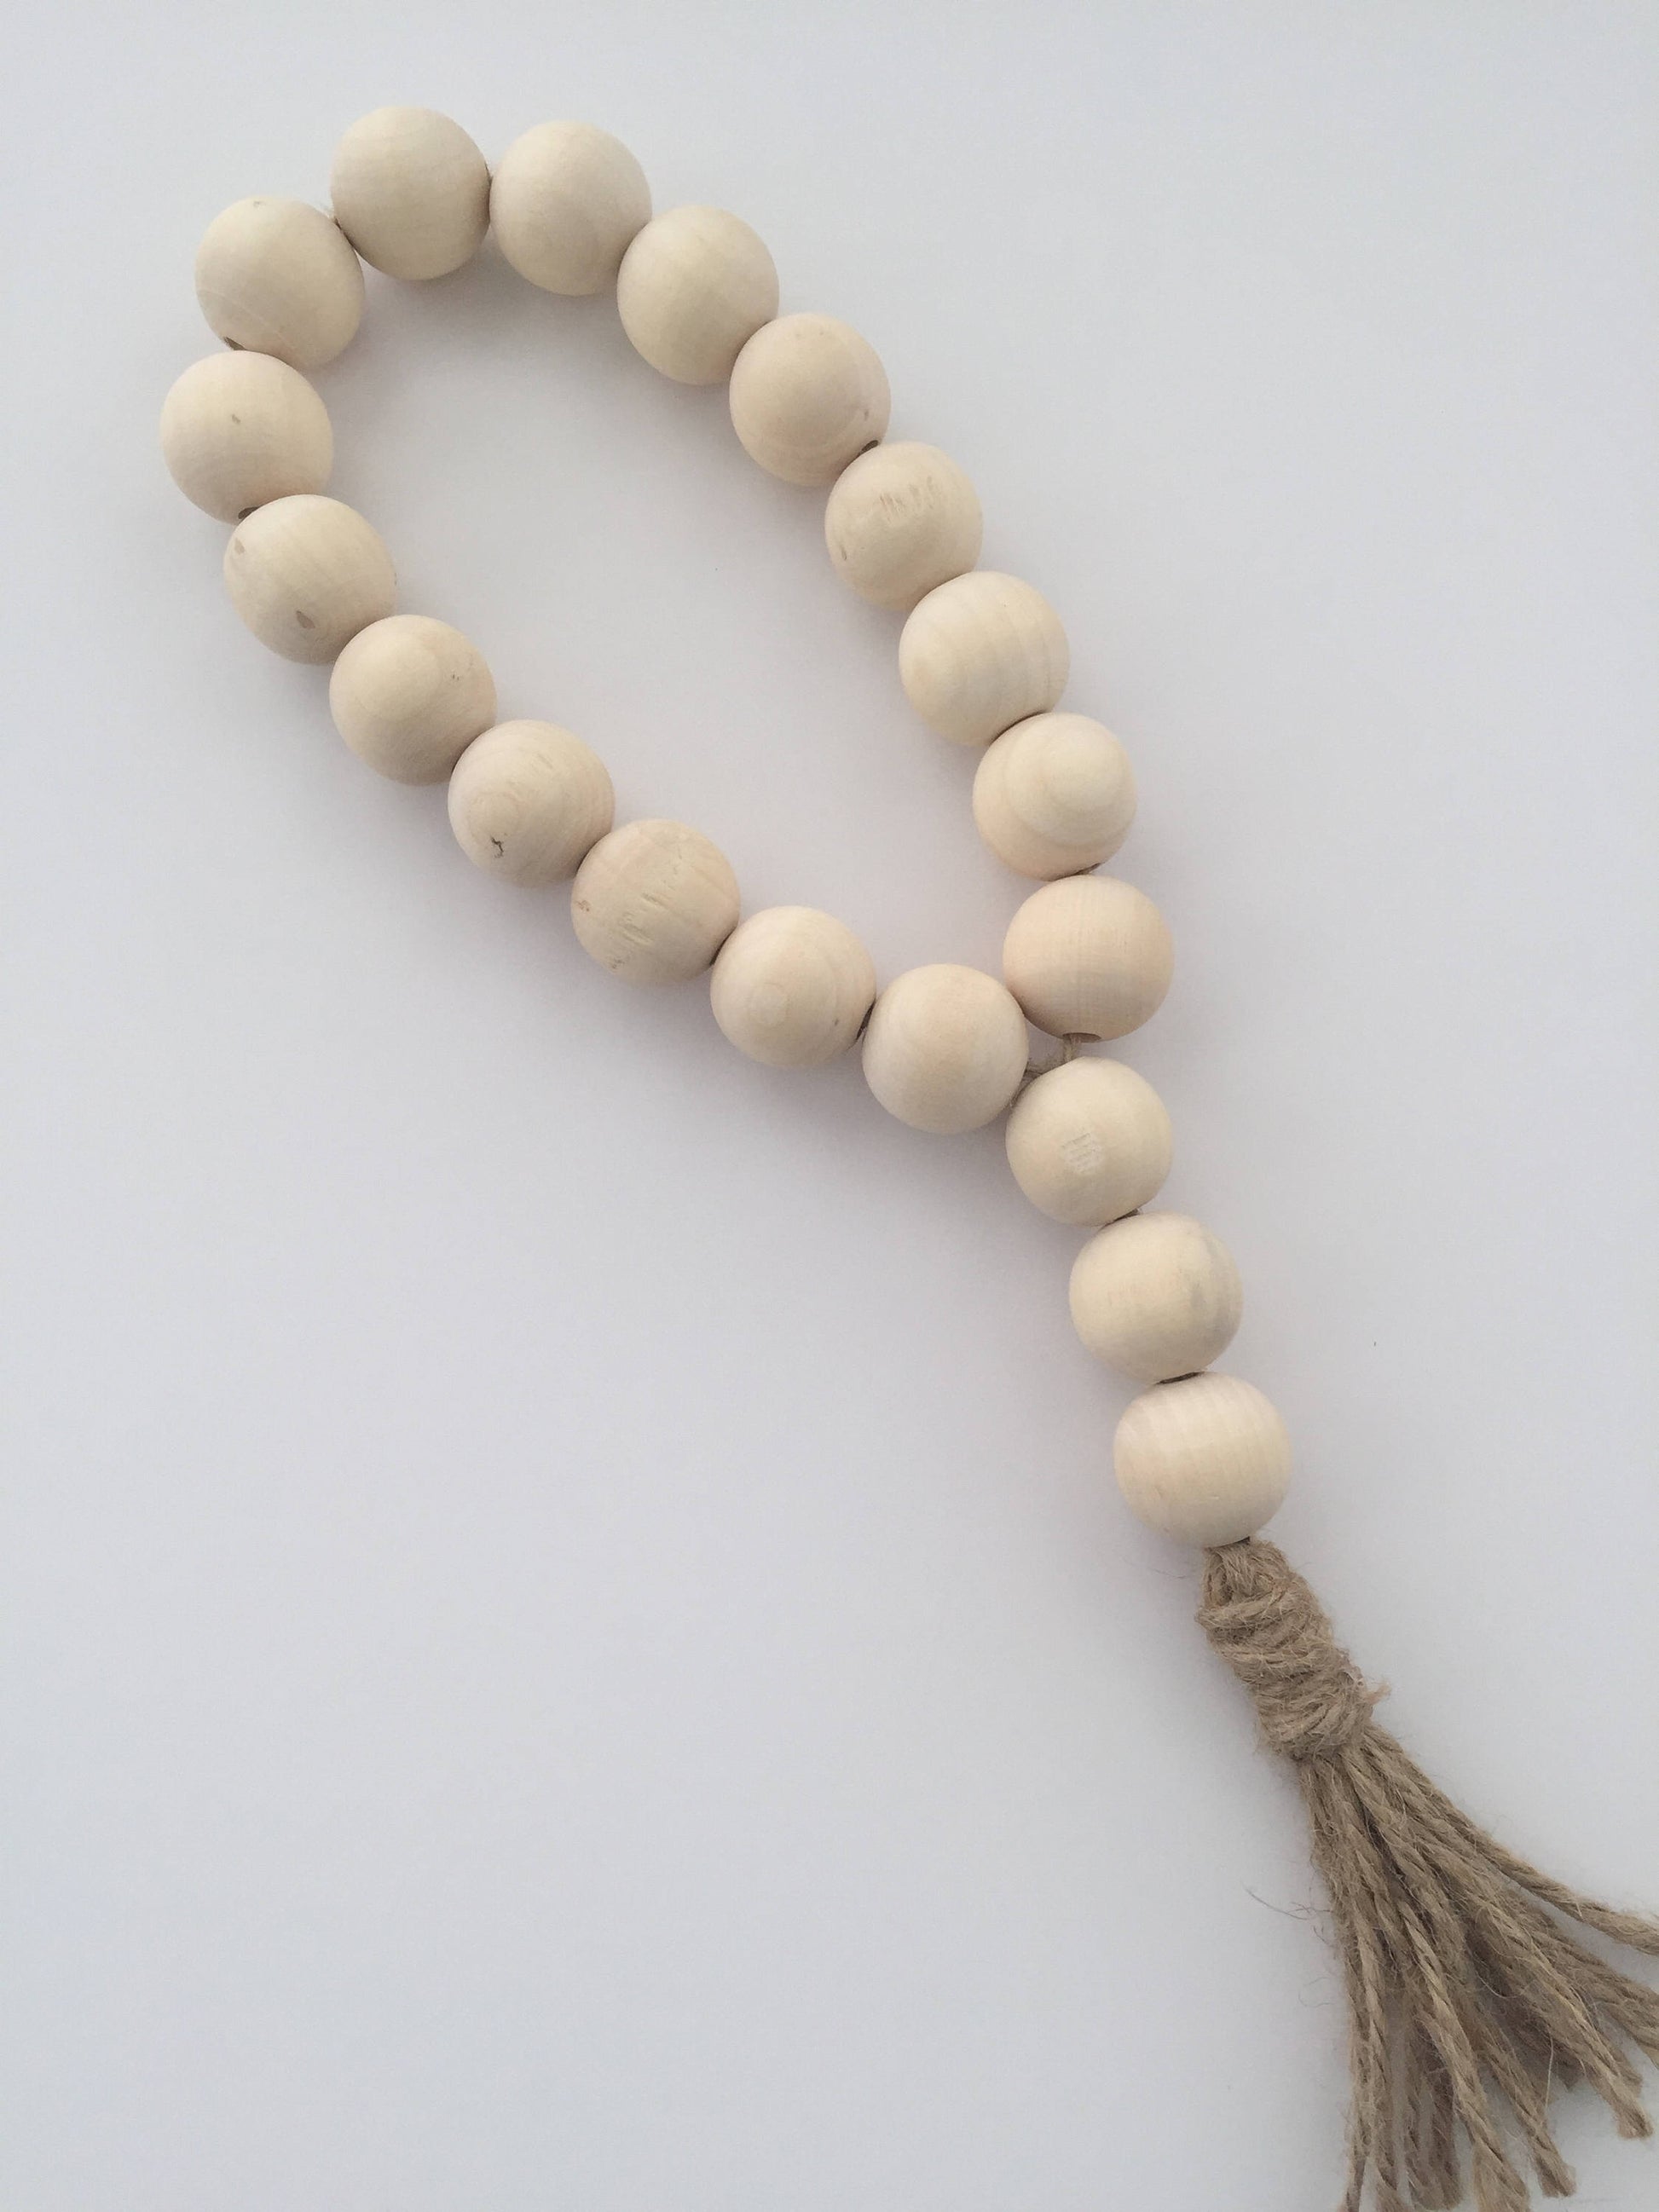 Large Bead Garland Wooden Bead String Rustic Prayer Beads